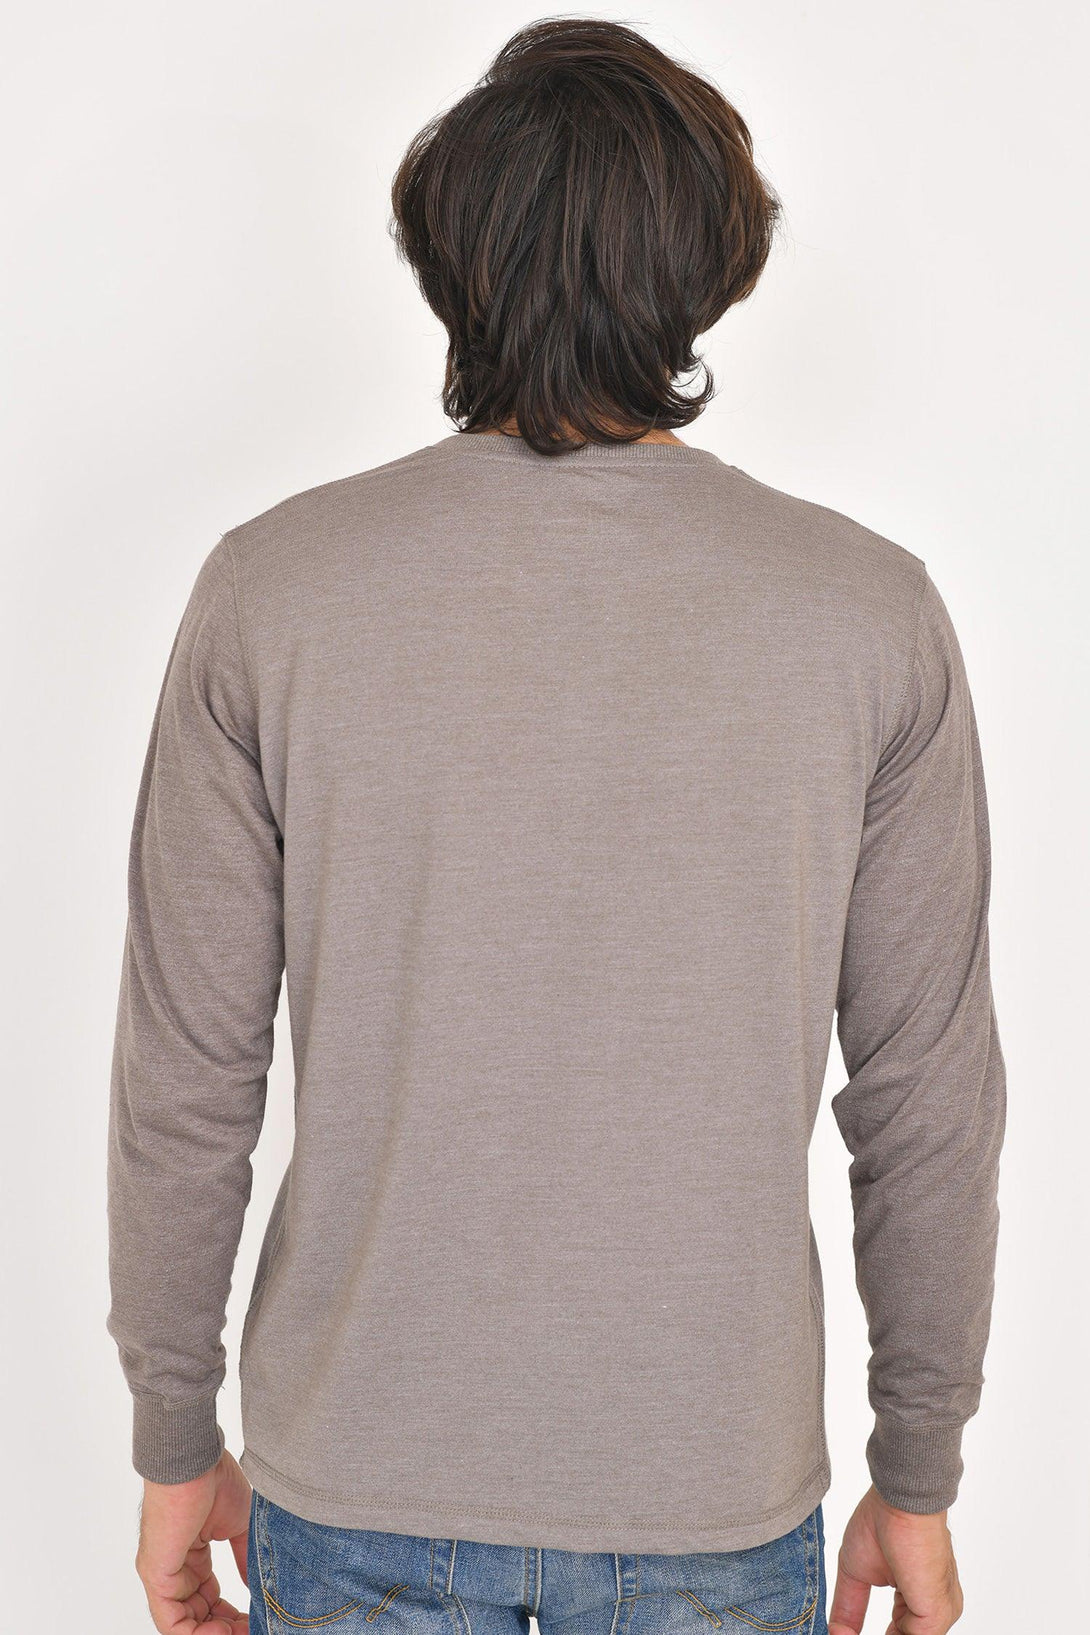 HENLEY Full Sleeve Shirts | DK GREY & AQUA Pack of 2 - FTS